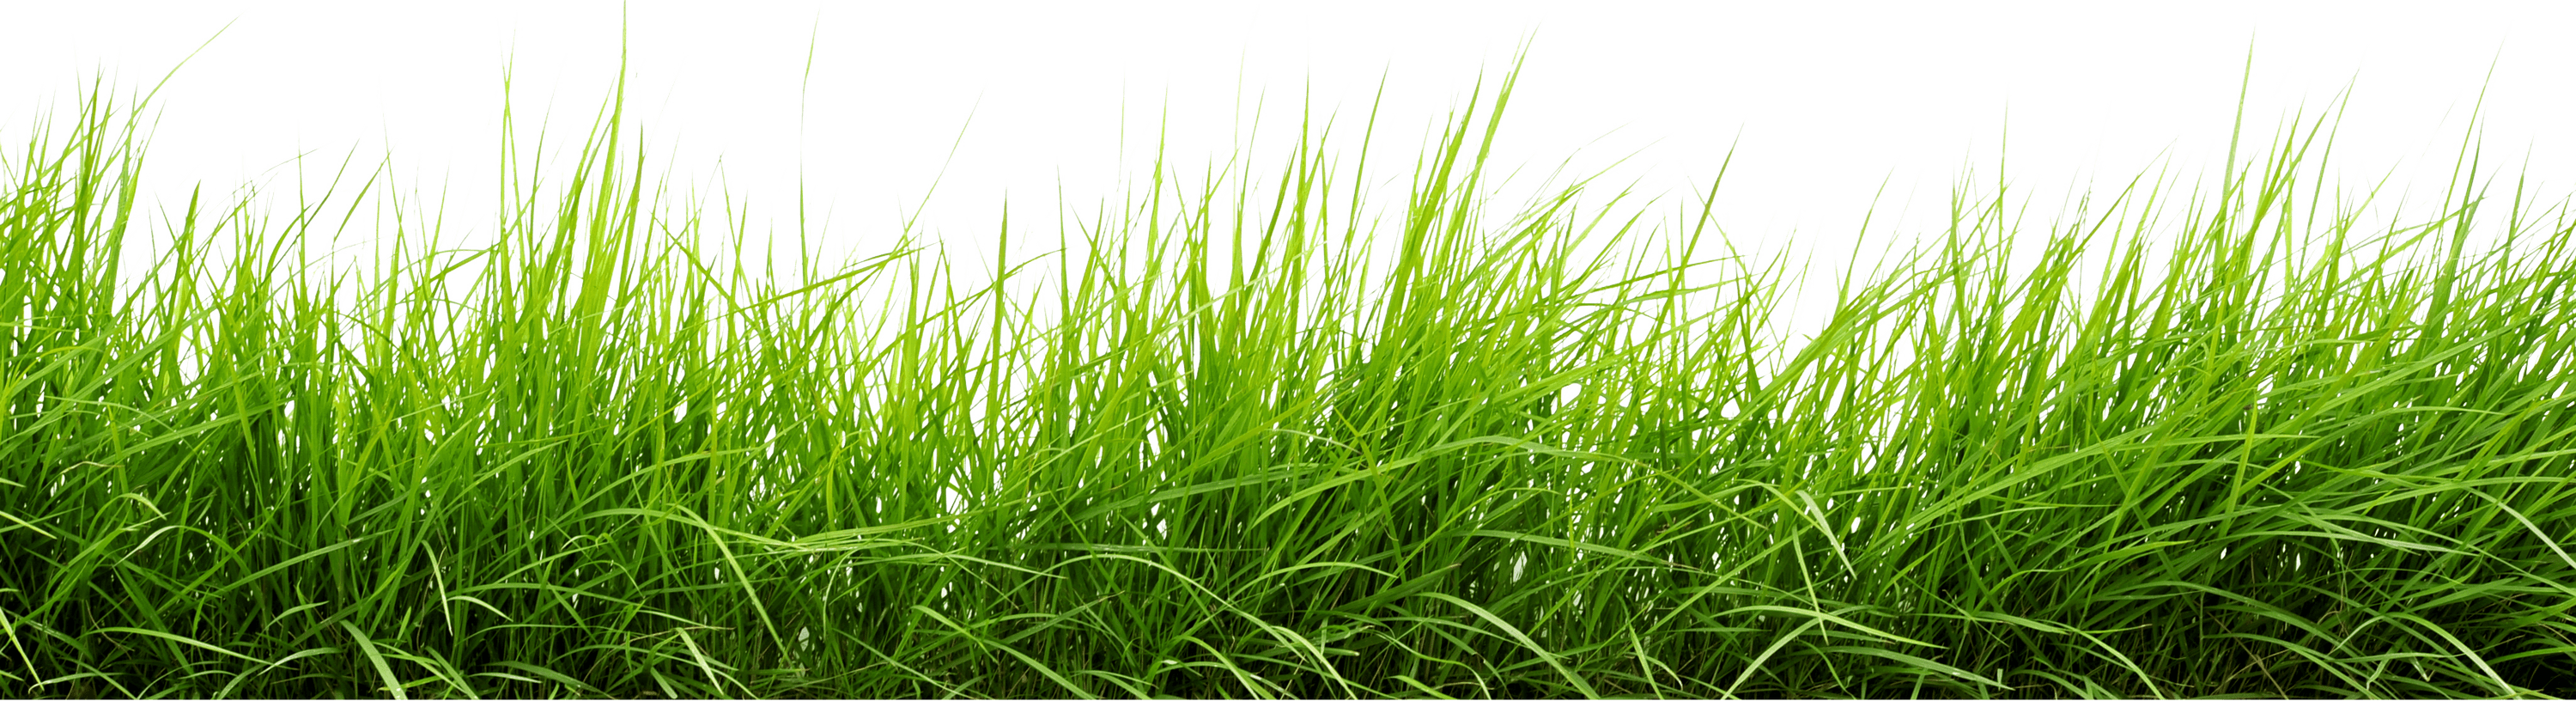 Line Of Grass PNG Image - PurePNG | Free transparent CC0 PNG Image ...